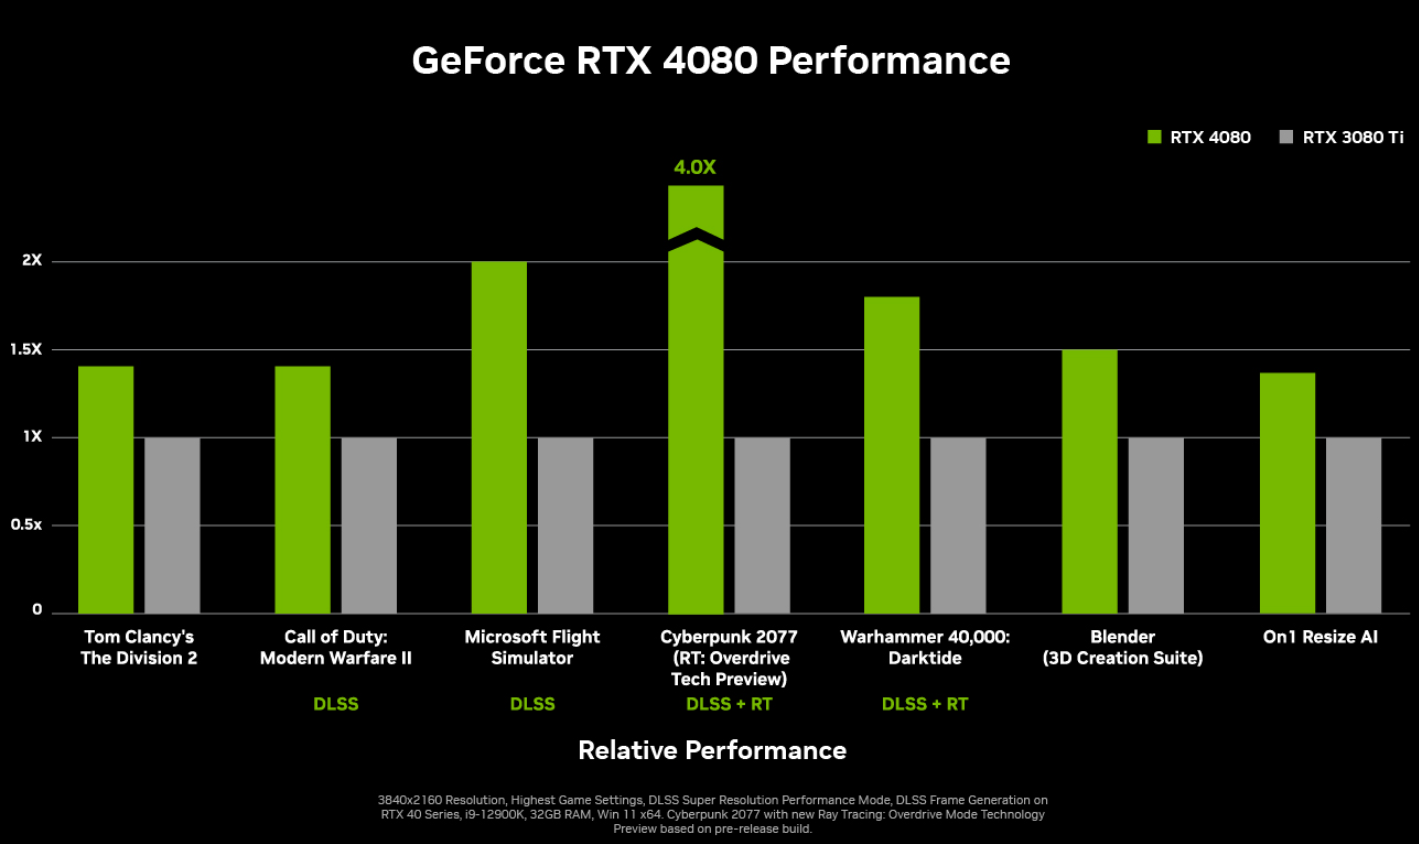 Gigabyte GeForce RTX 4090 GAMING OC 24G Graphics Card